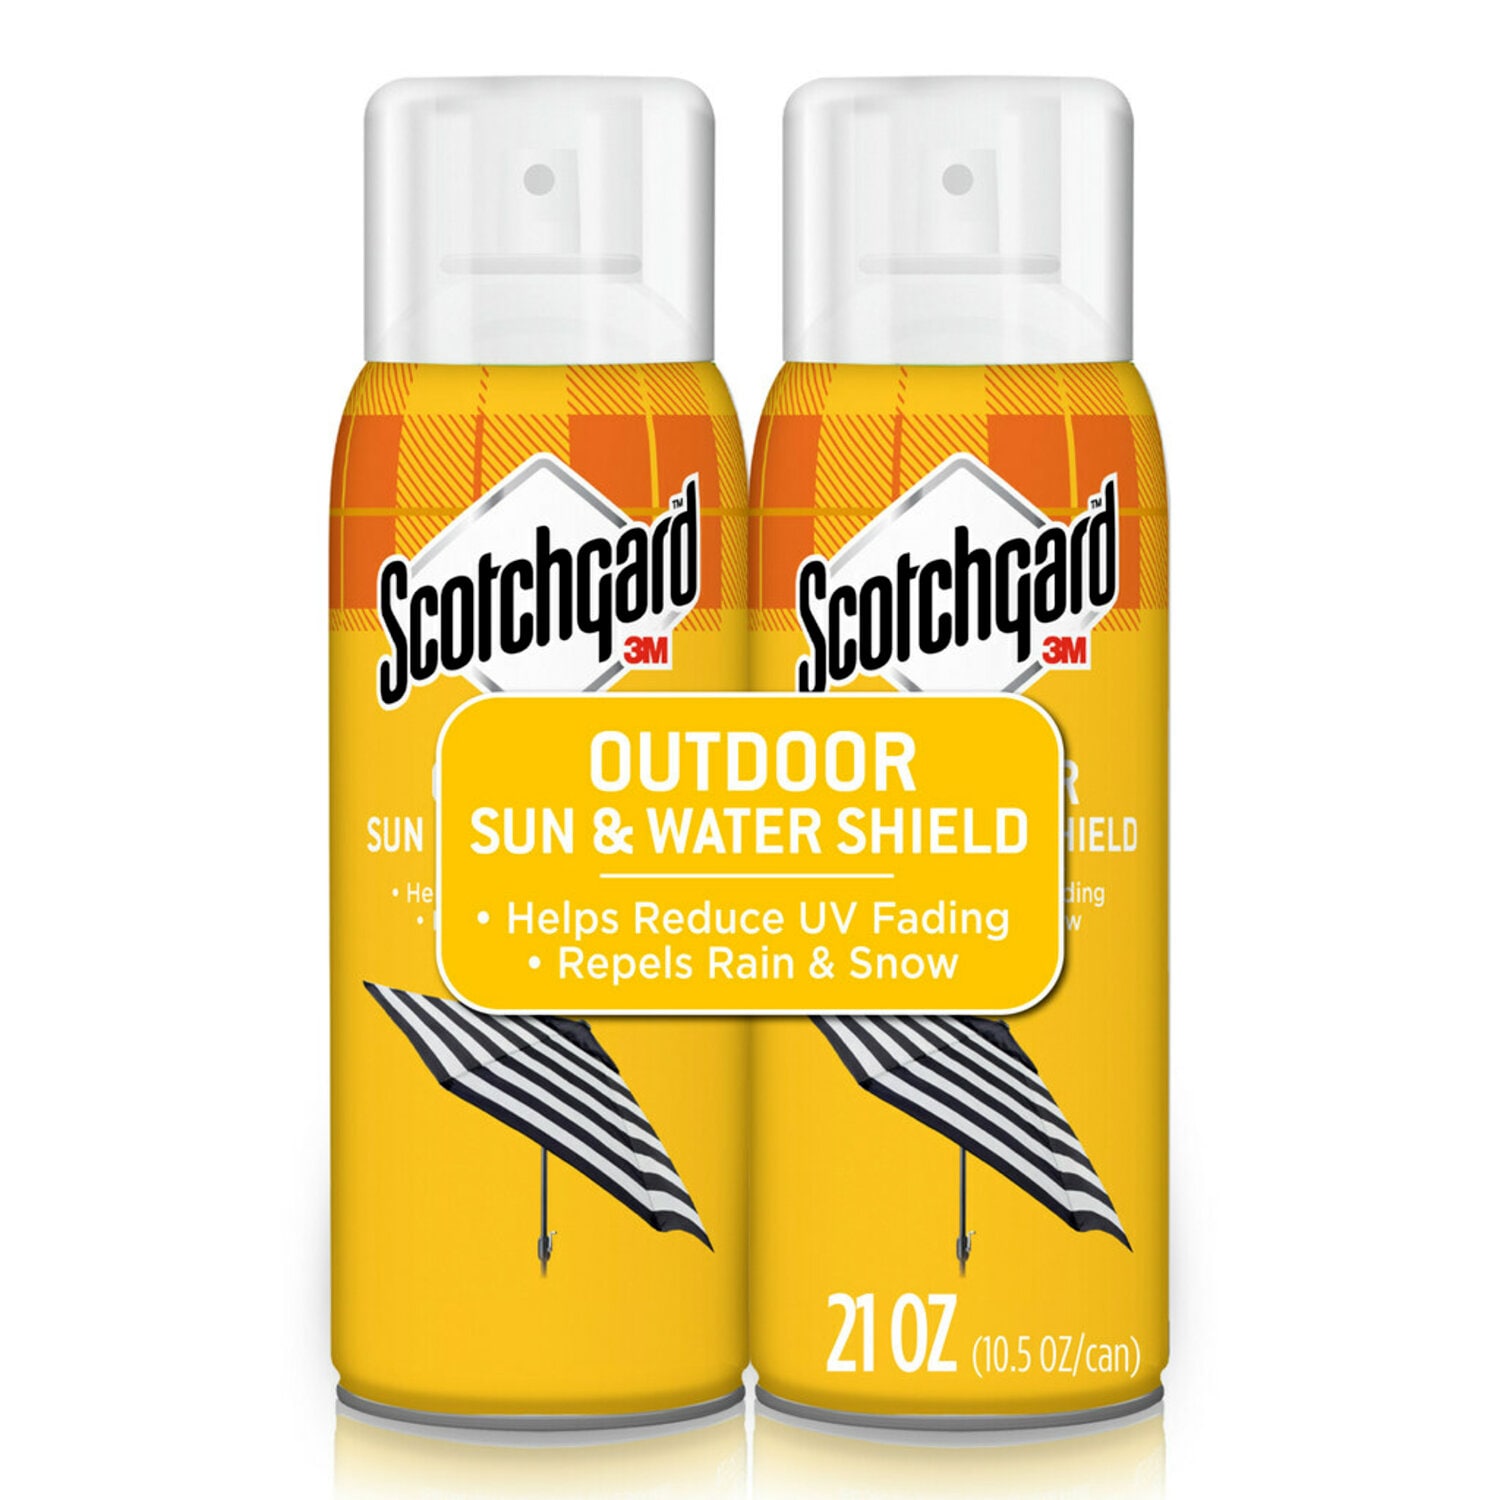 7100179190 - Scotchgard Outdoor Sun & Water Shield 2-pack 5019-10UV-2PK, 10.5 oz (297 g), 6/2